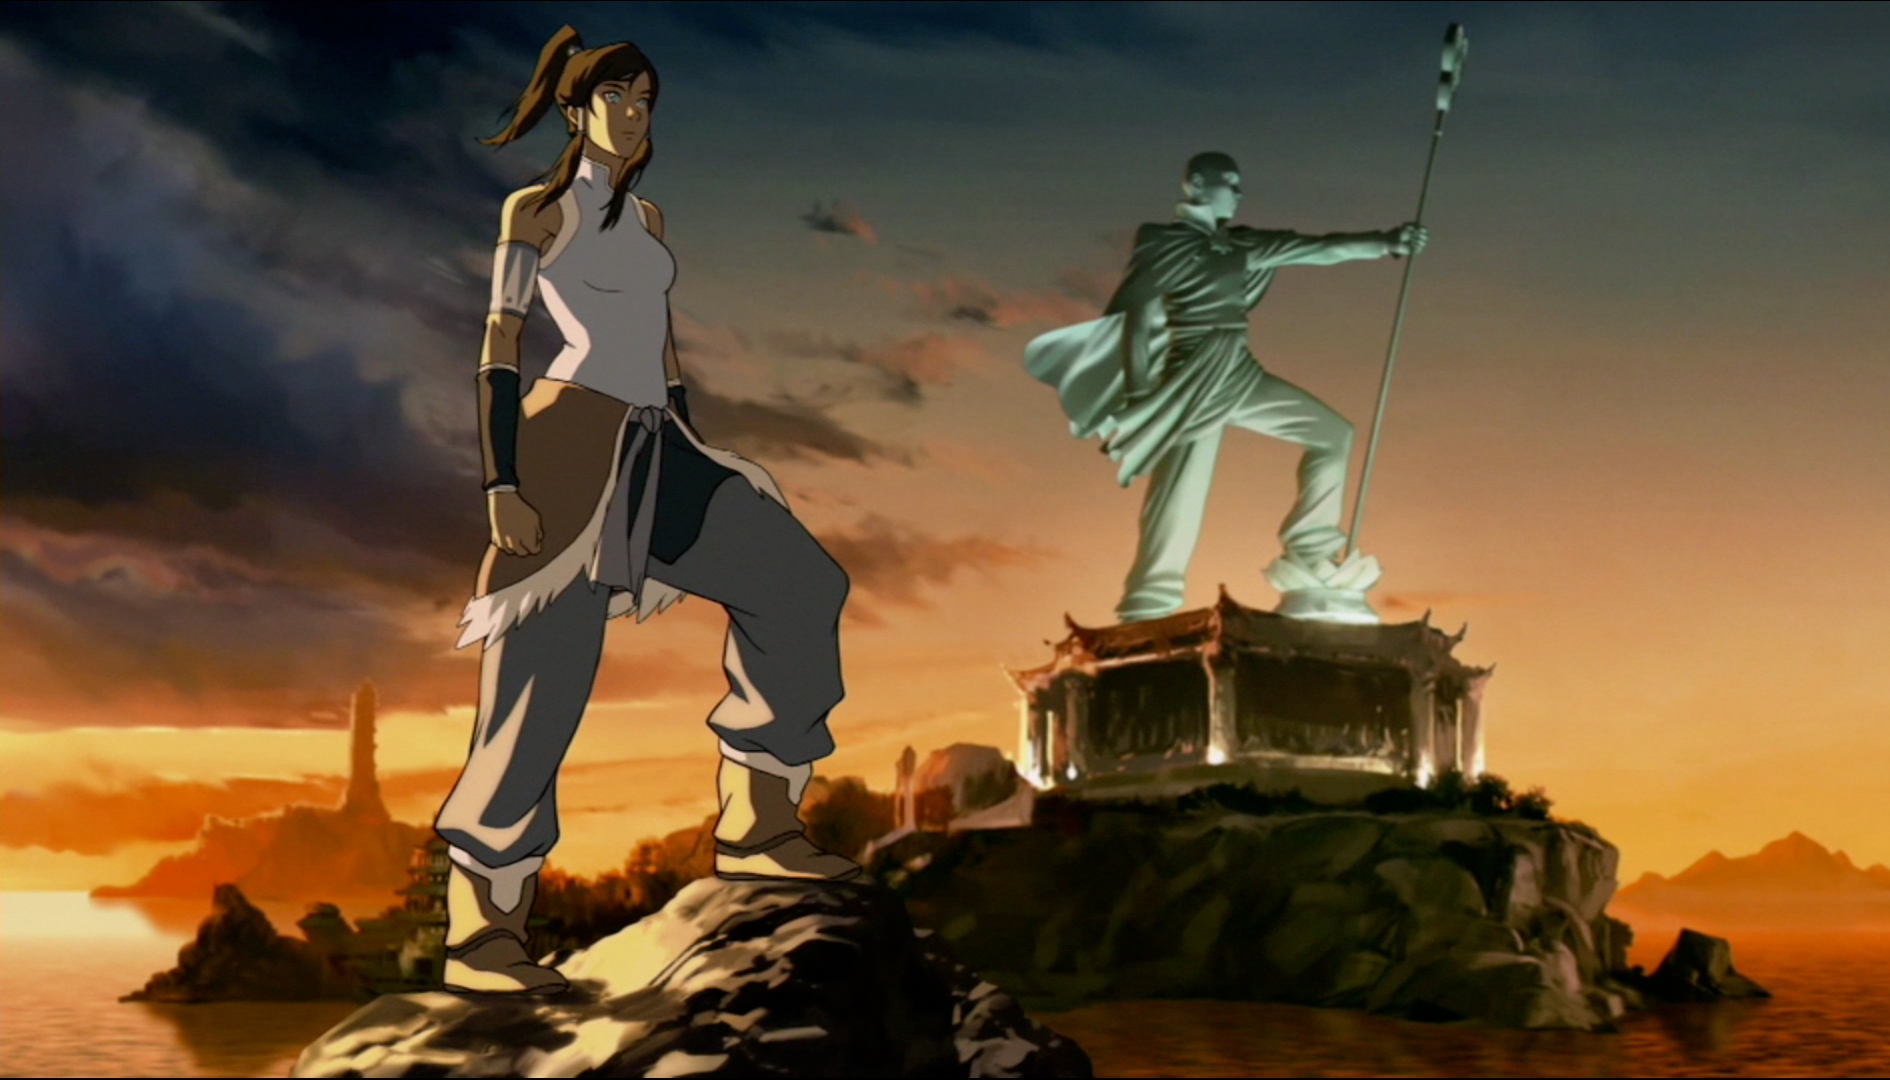 Korra from The Legend of Korra standing with Aang statue